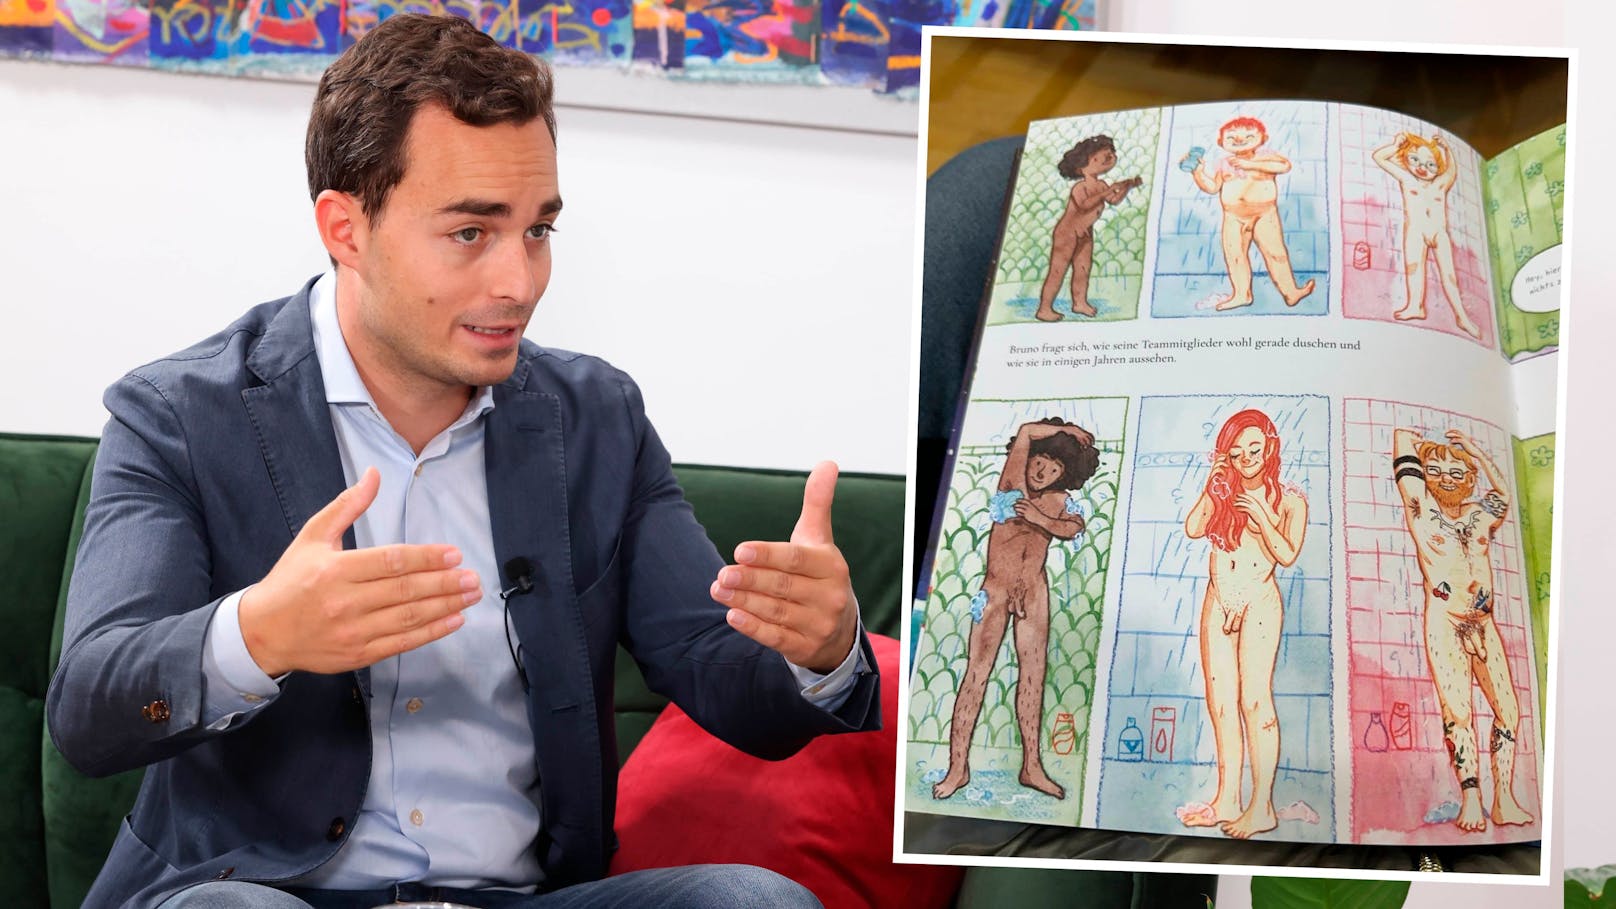 Penis-Bilder in gefördertem Kinderbuch erzürnen die FPÖ